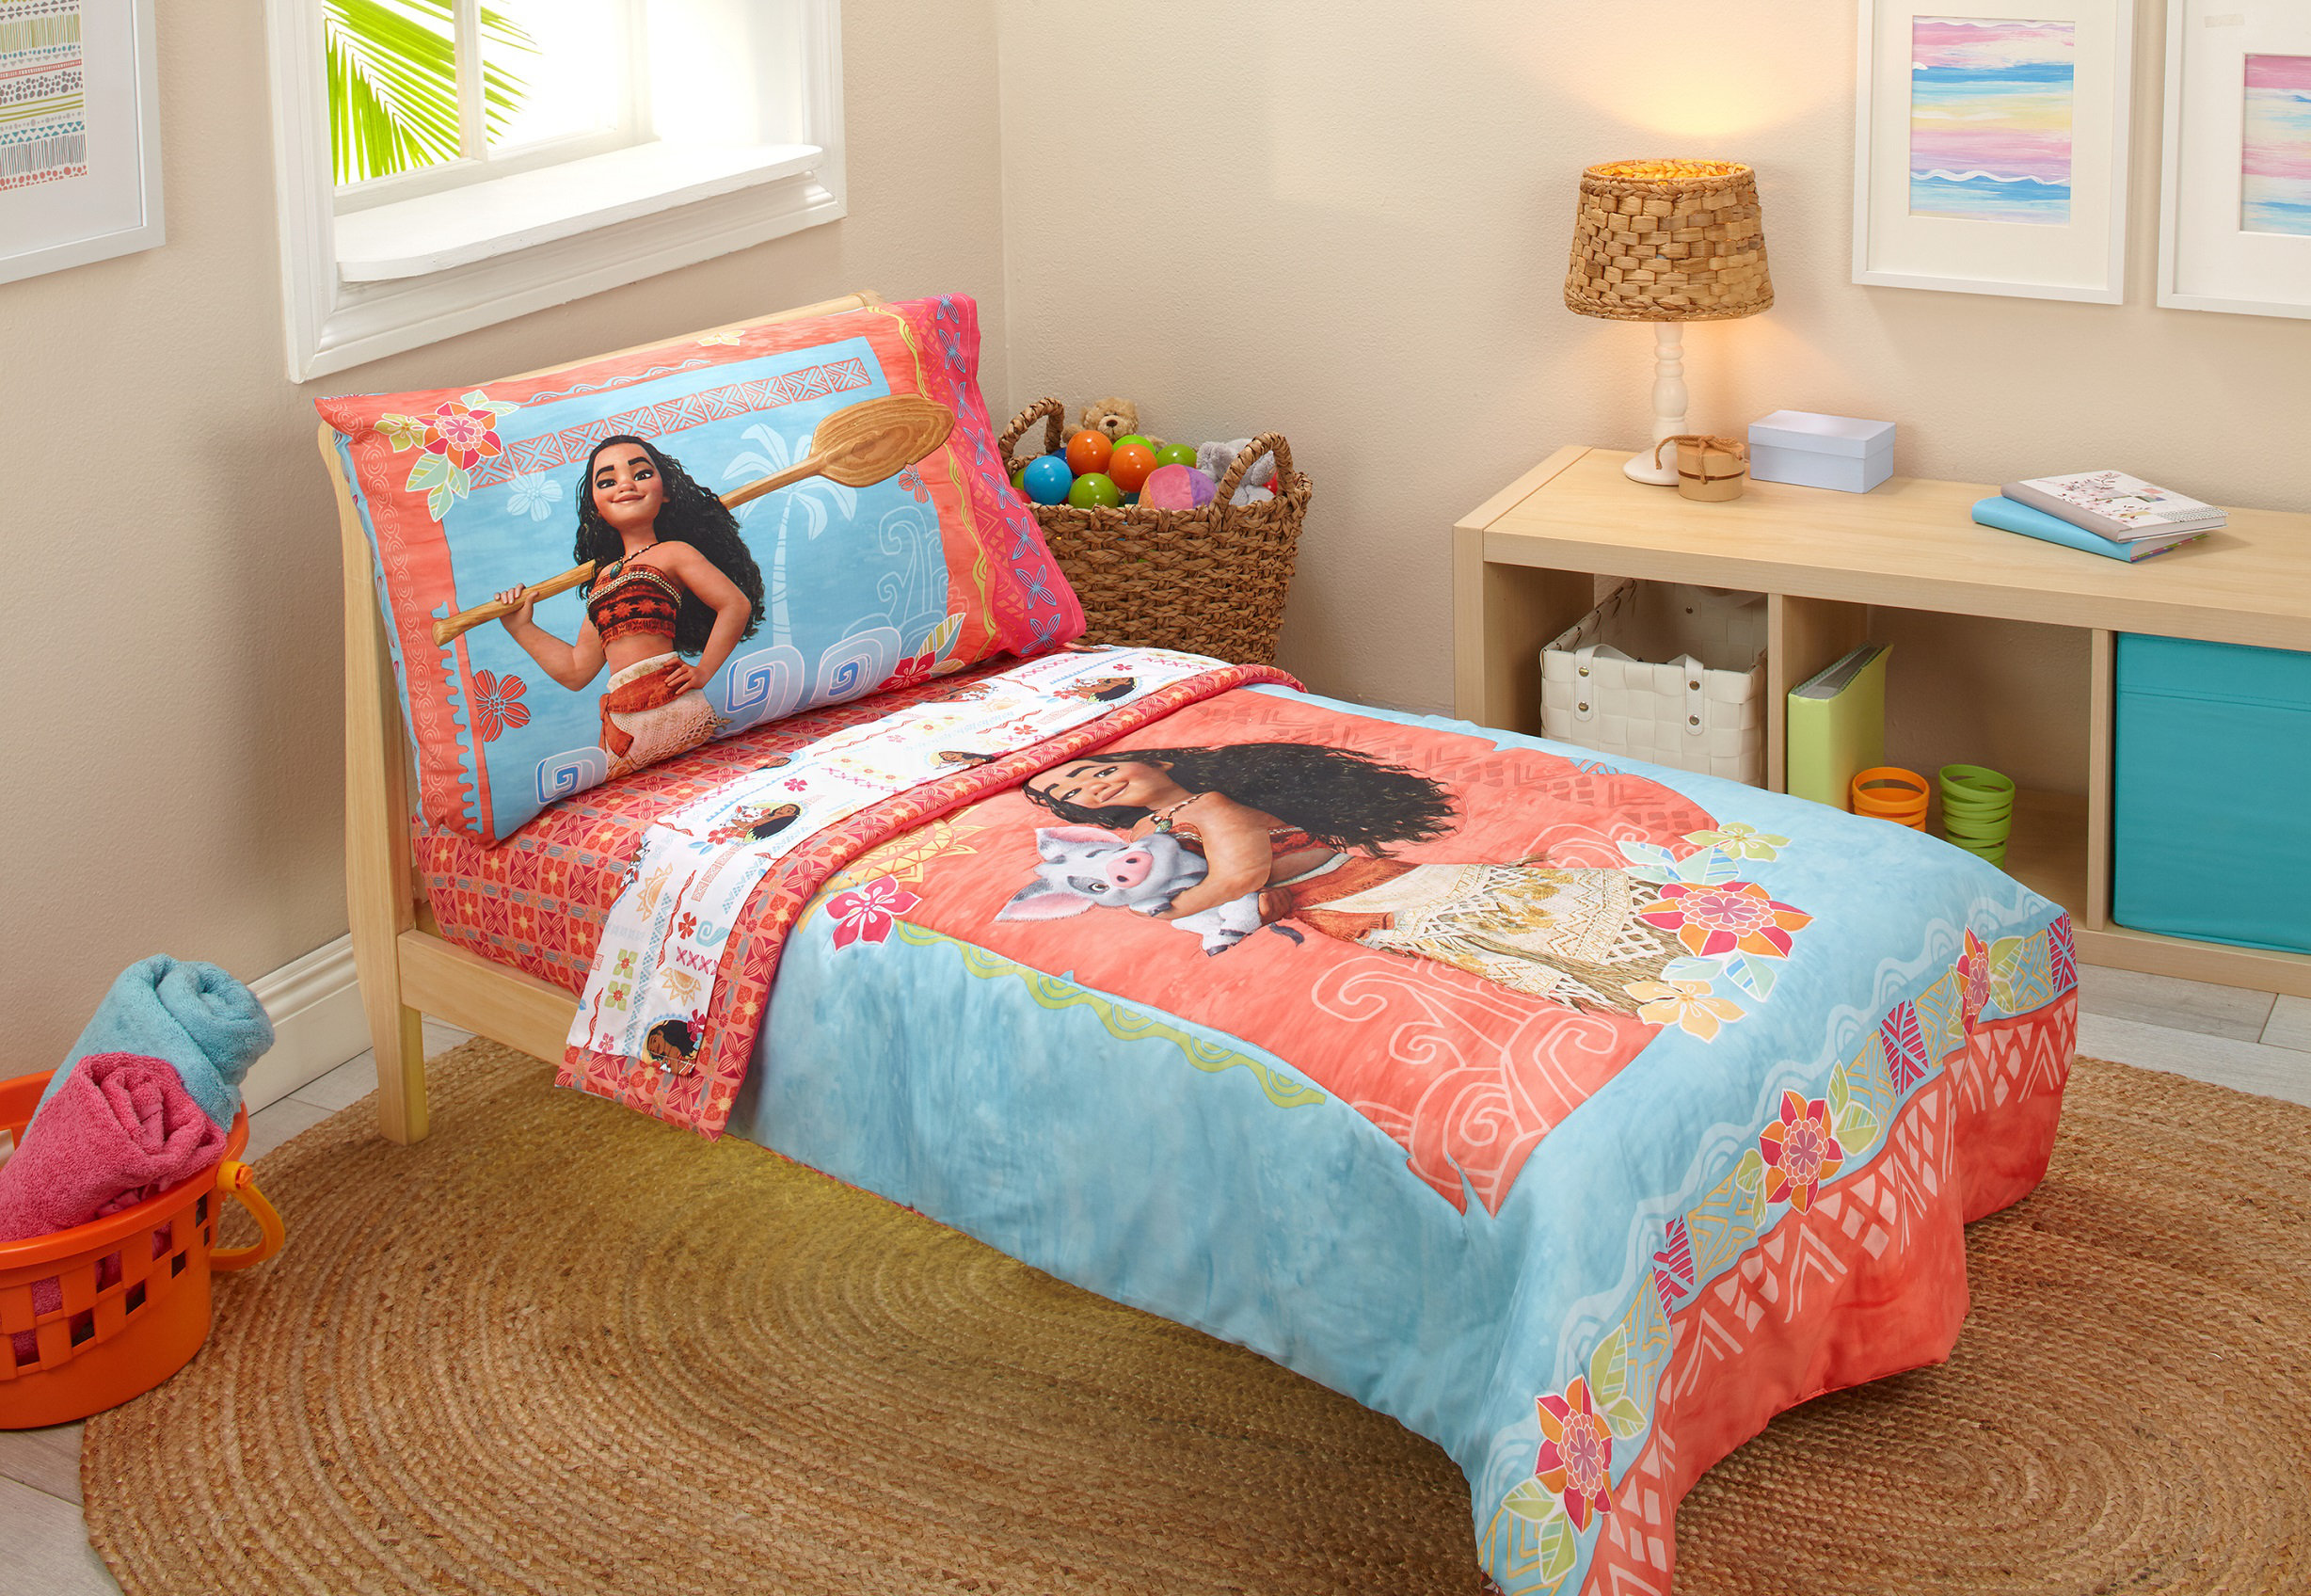 Disney Moana Reversible Twin/Full Polyester Multicolor Comforter For Girls